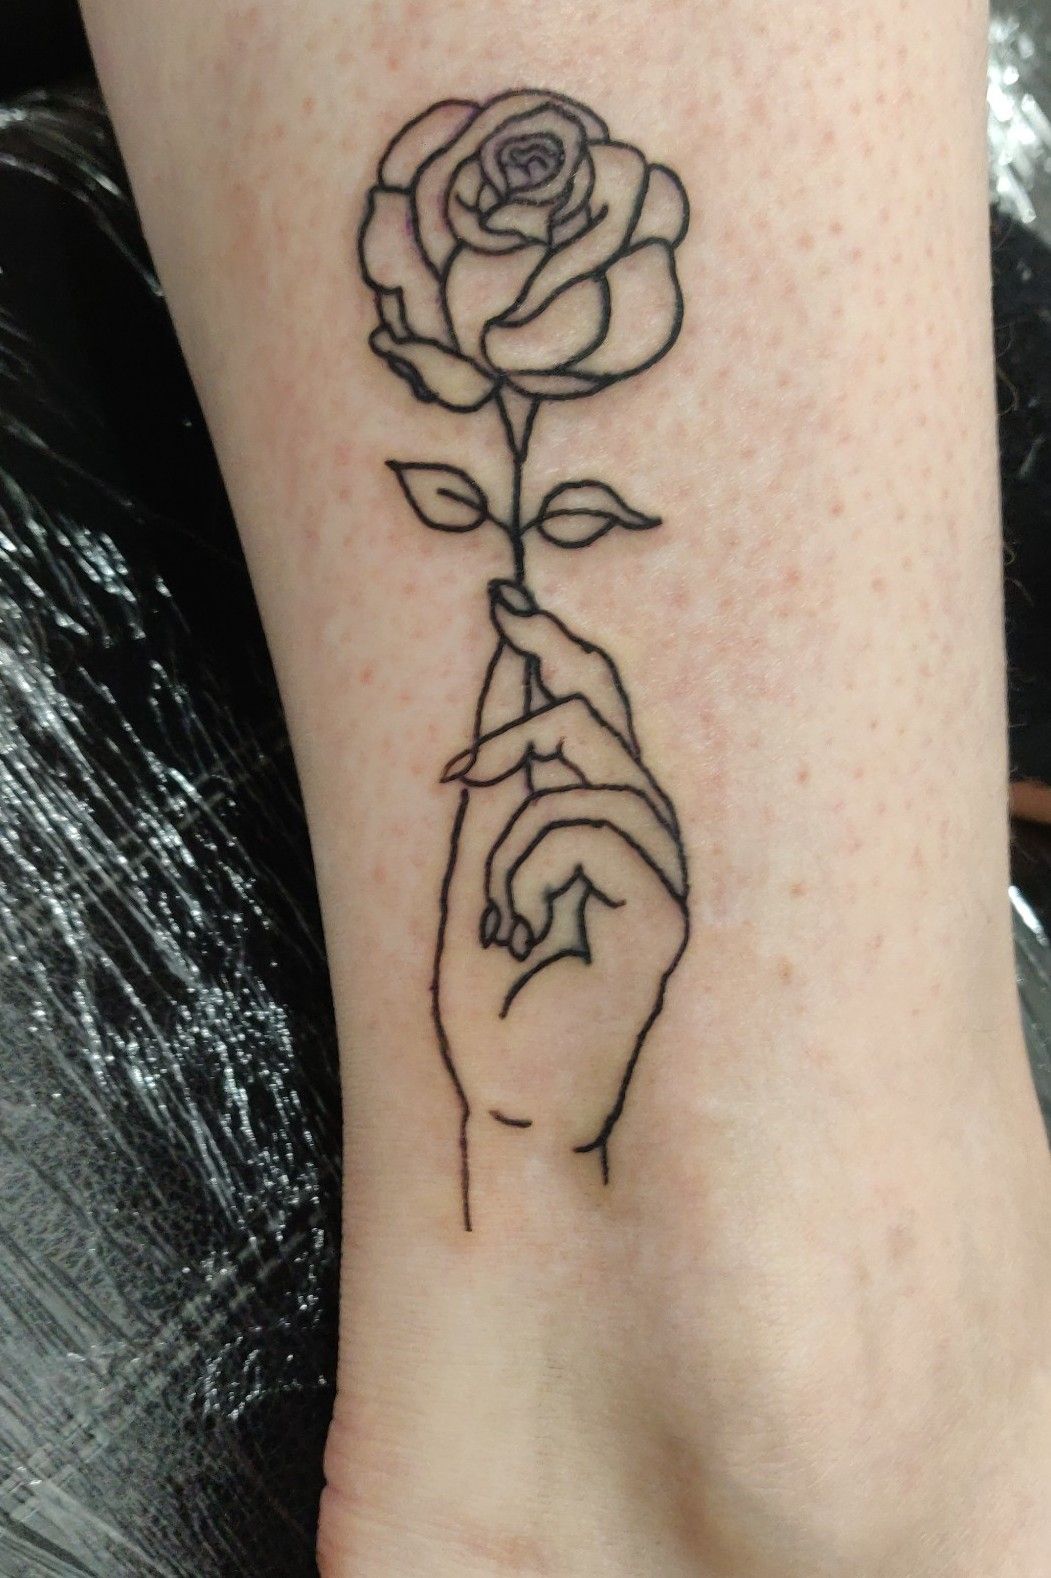 Hand holding flower tattoo by Gio Luca TattooNOW